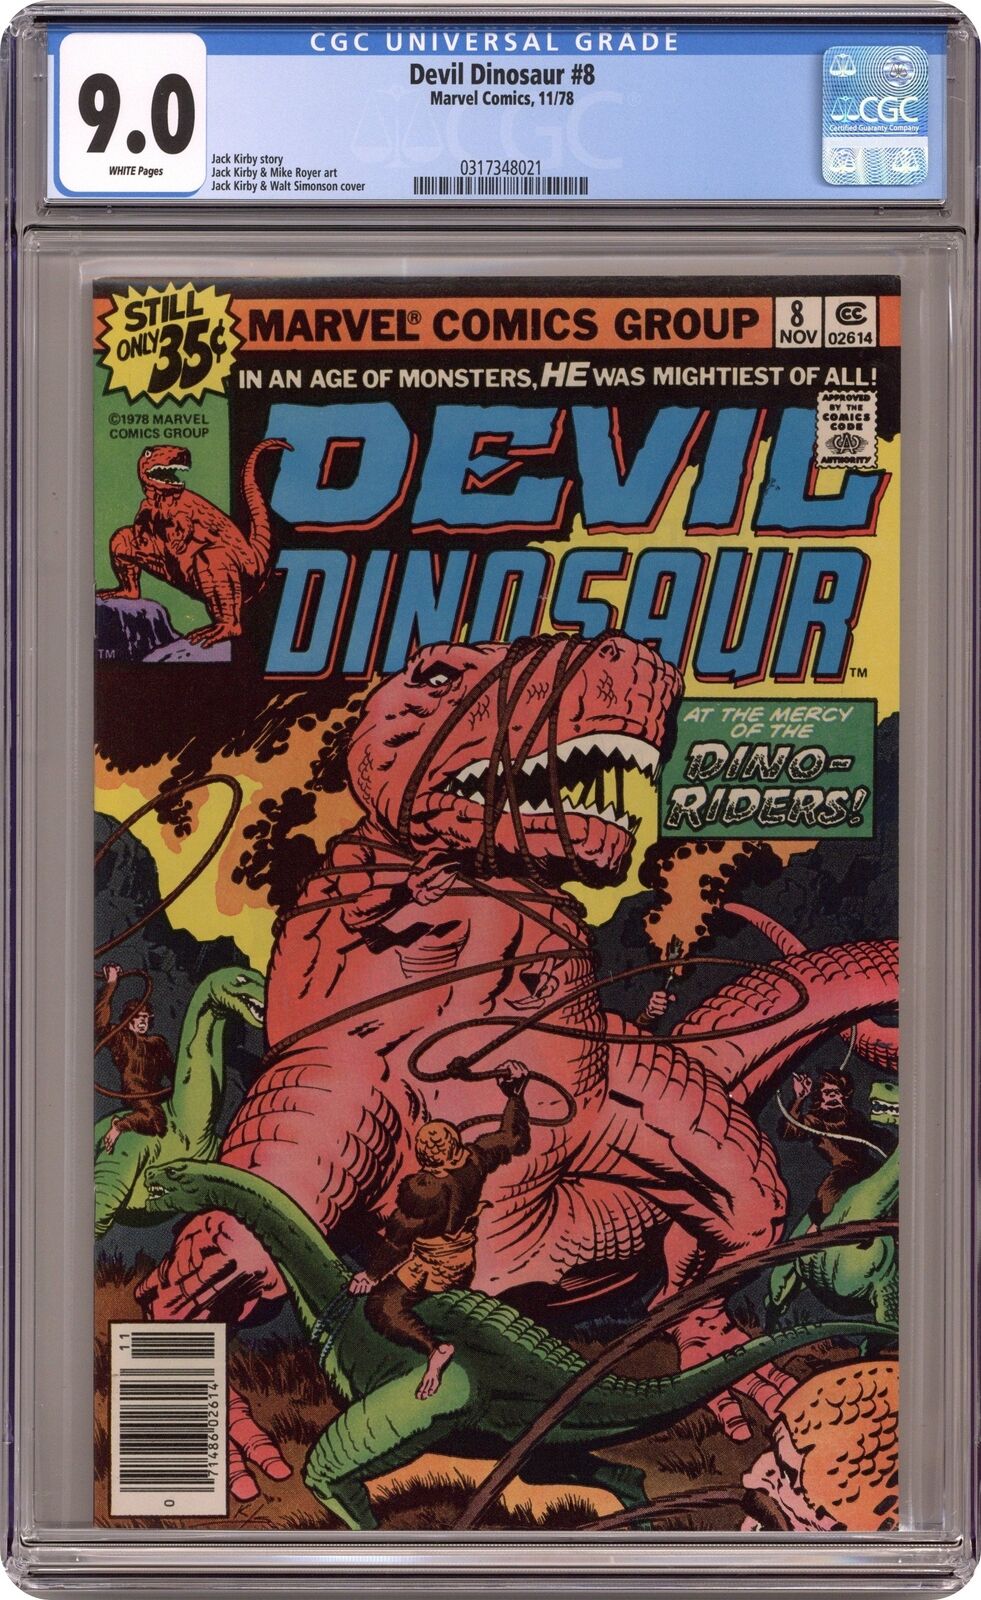 Devil Dinosaur #8 CGC 9.0 1978 0317348021